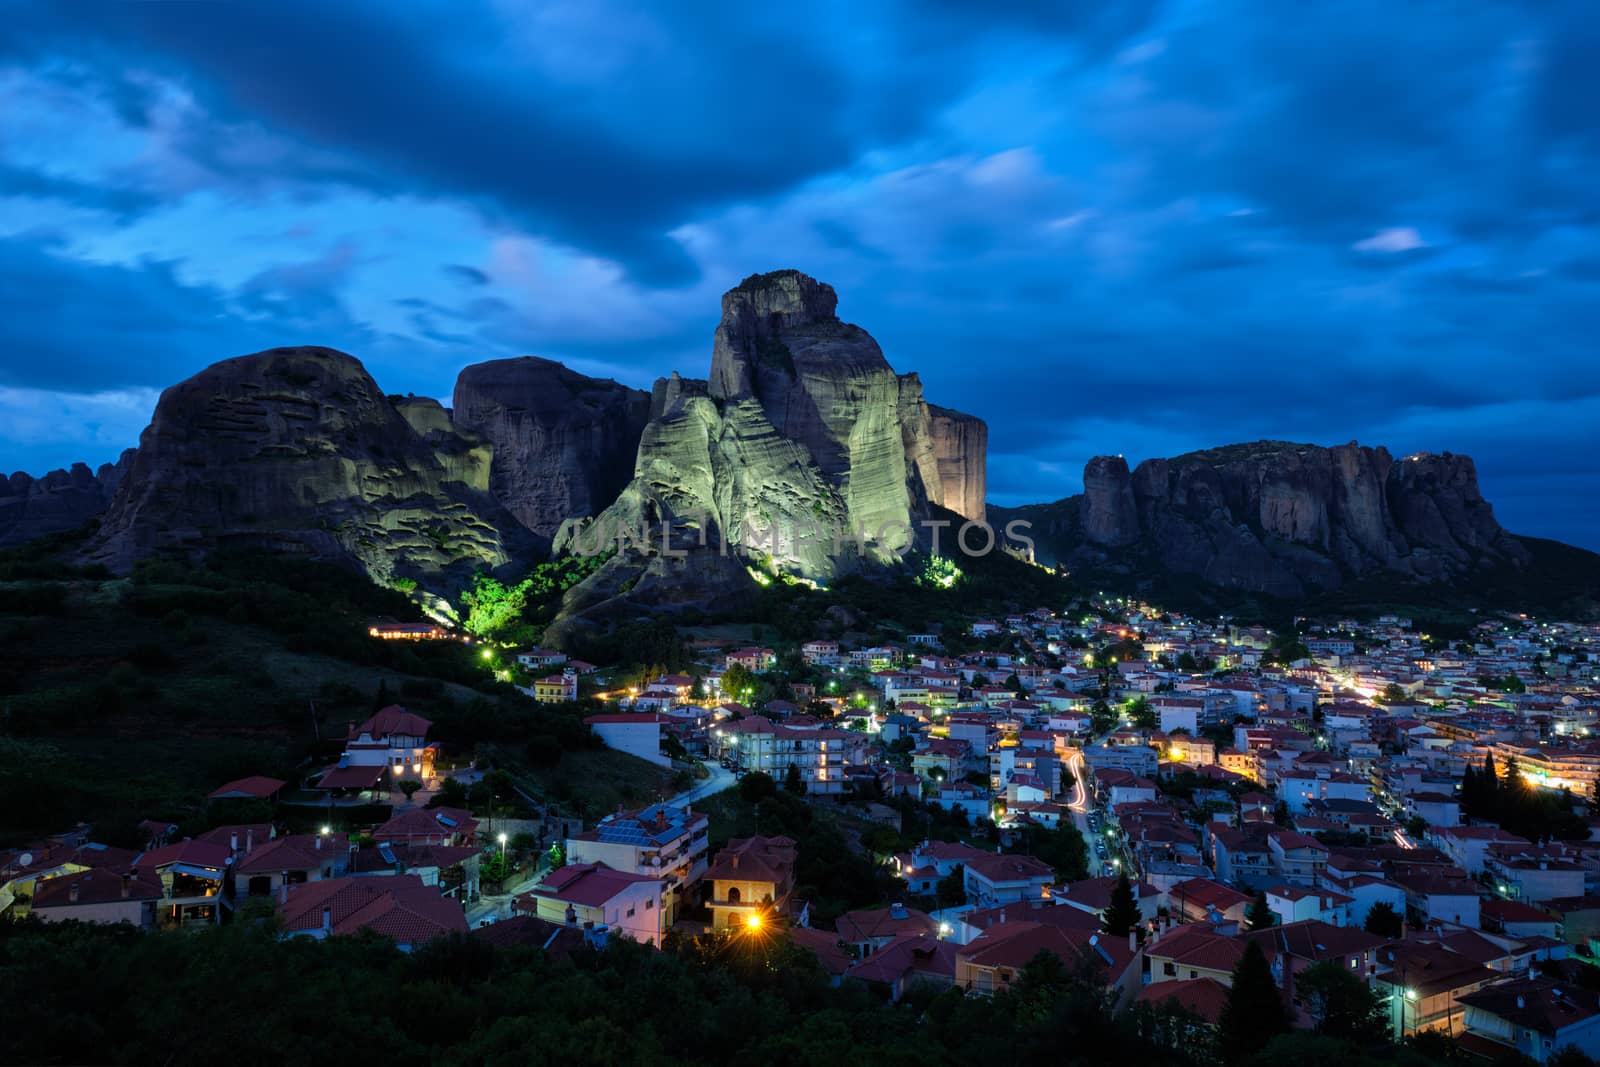 Kalambaka village in famous tourist destination Meteora in Greece in night by dimol